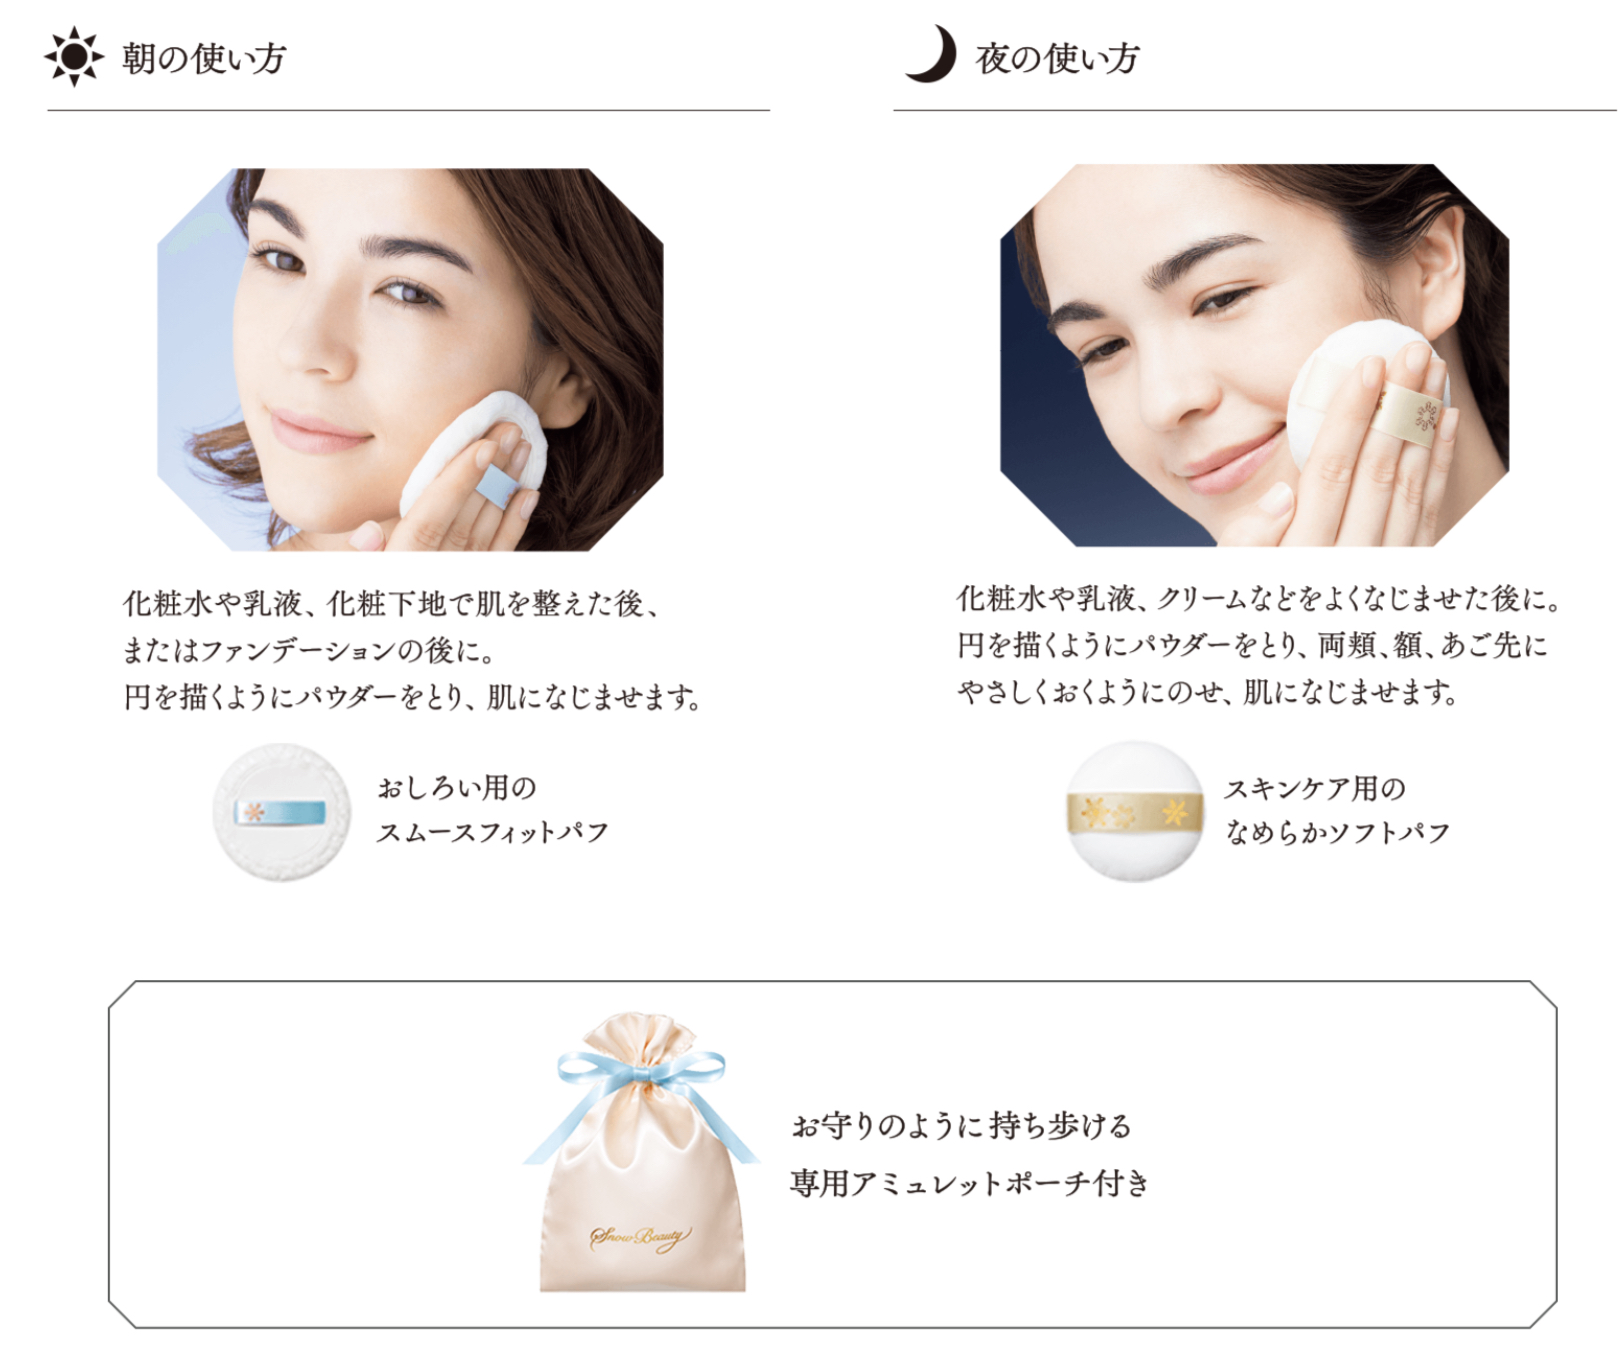 Shiseido スノービューティー 18 化粧品専門店 Sakuraya For Me 株式会社さくら屋